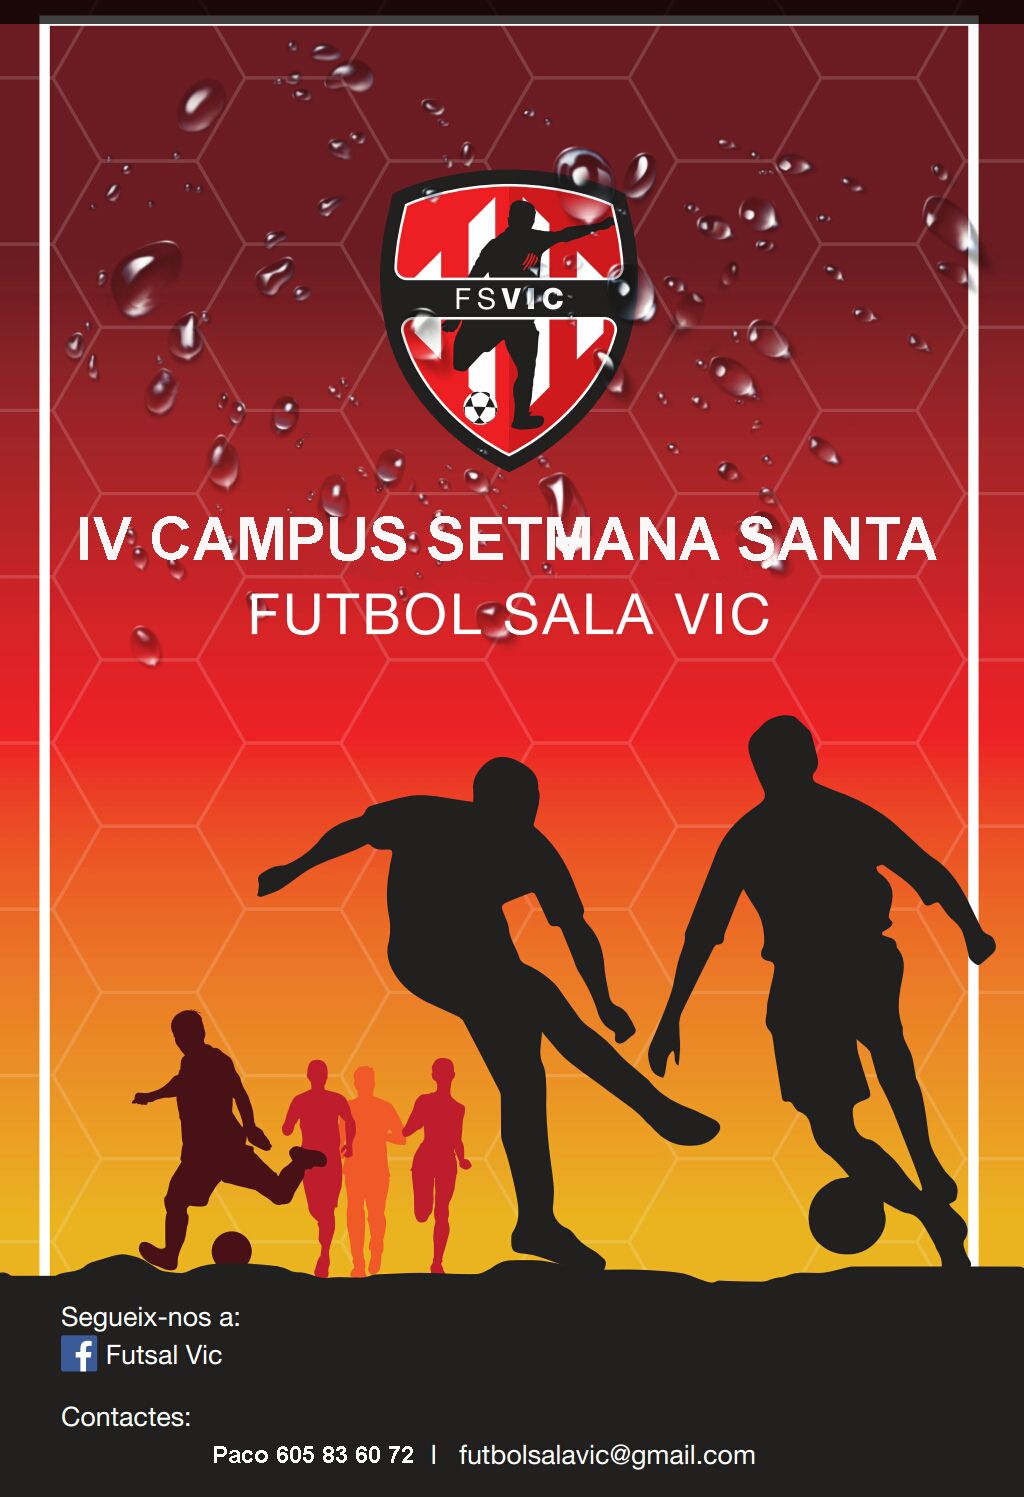 Futsalvi | Campus setmana santa 17/18